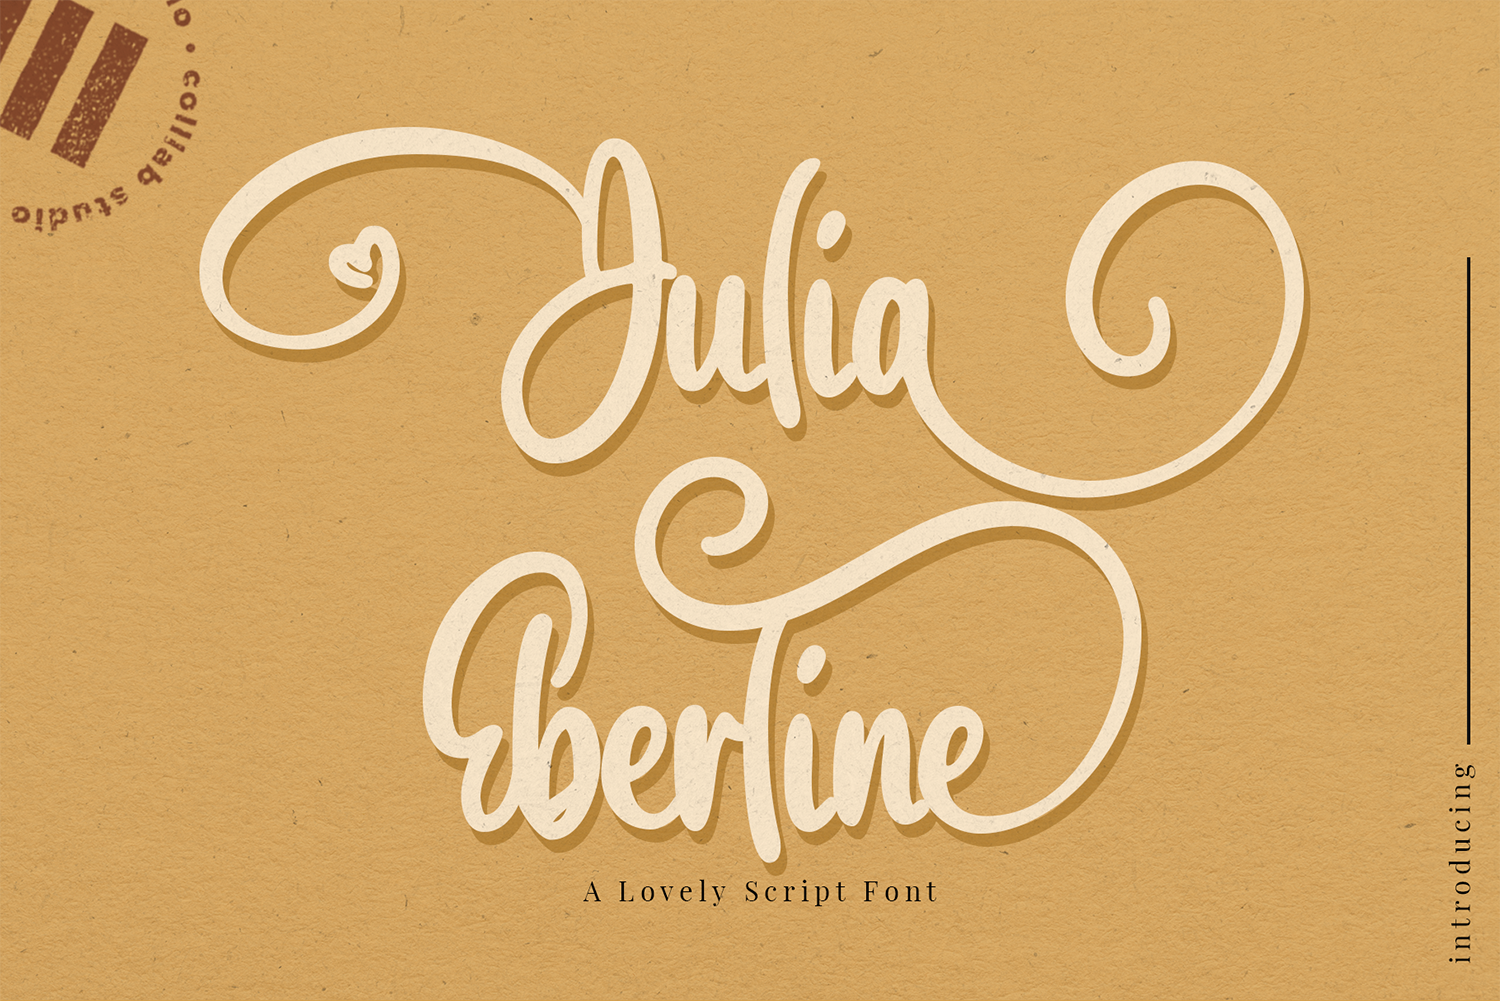 Julia Eberline Free Font